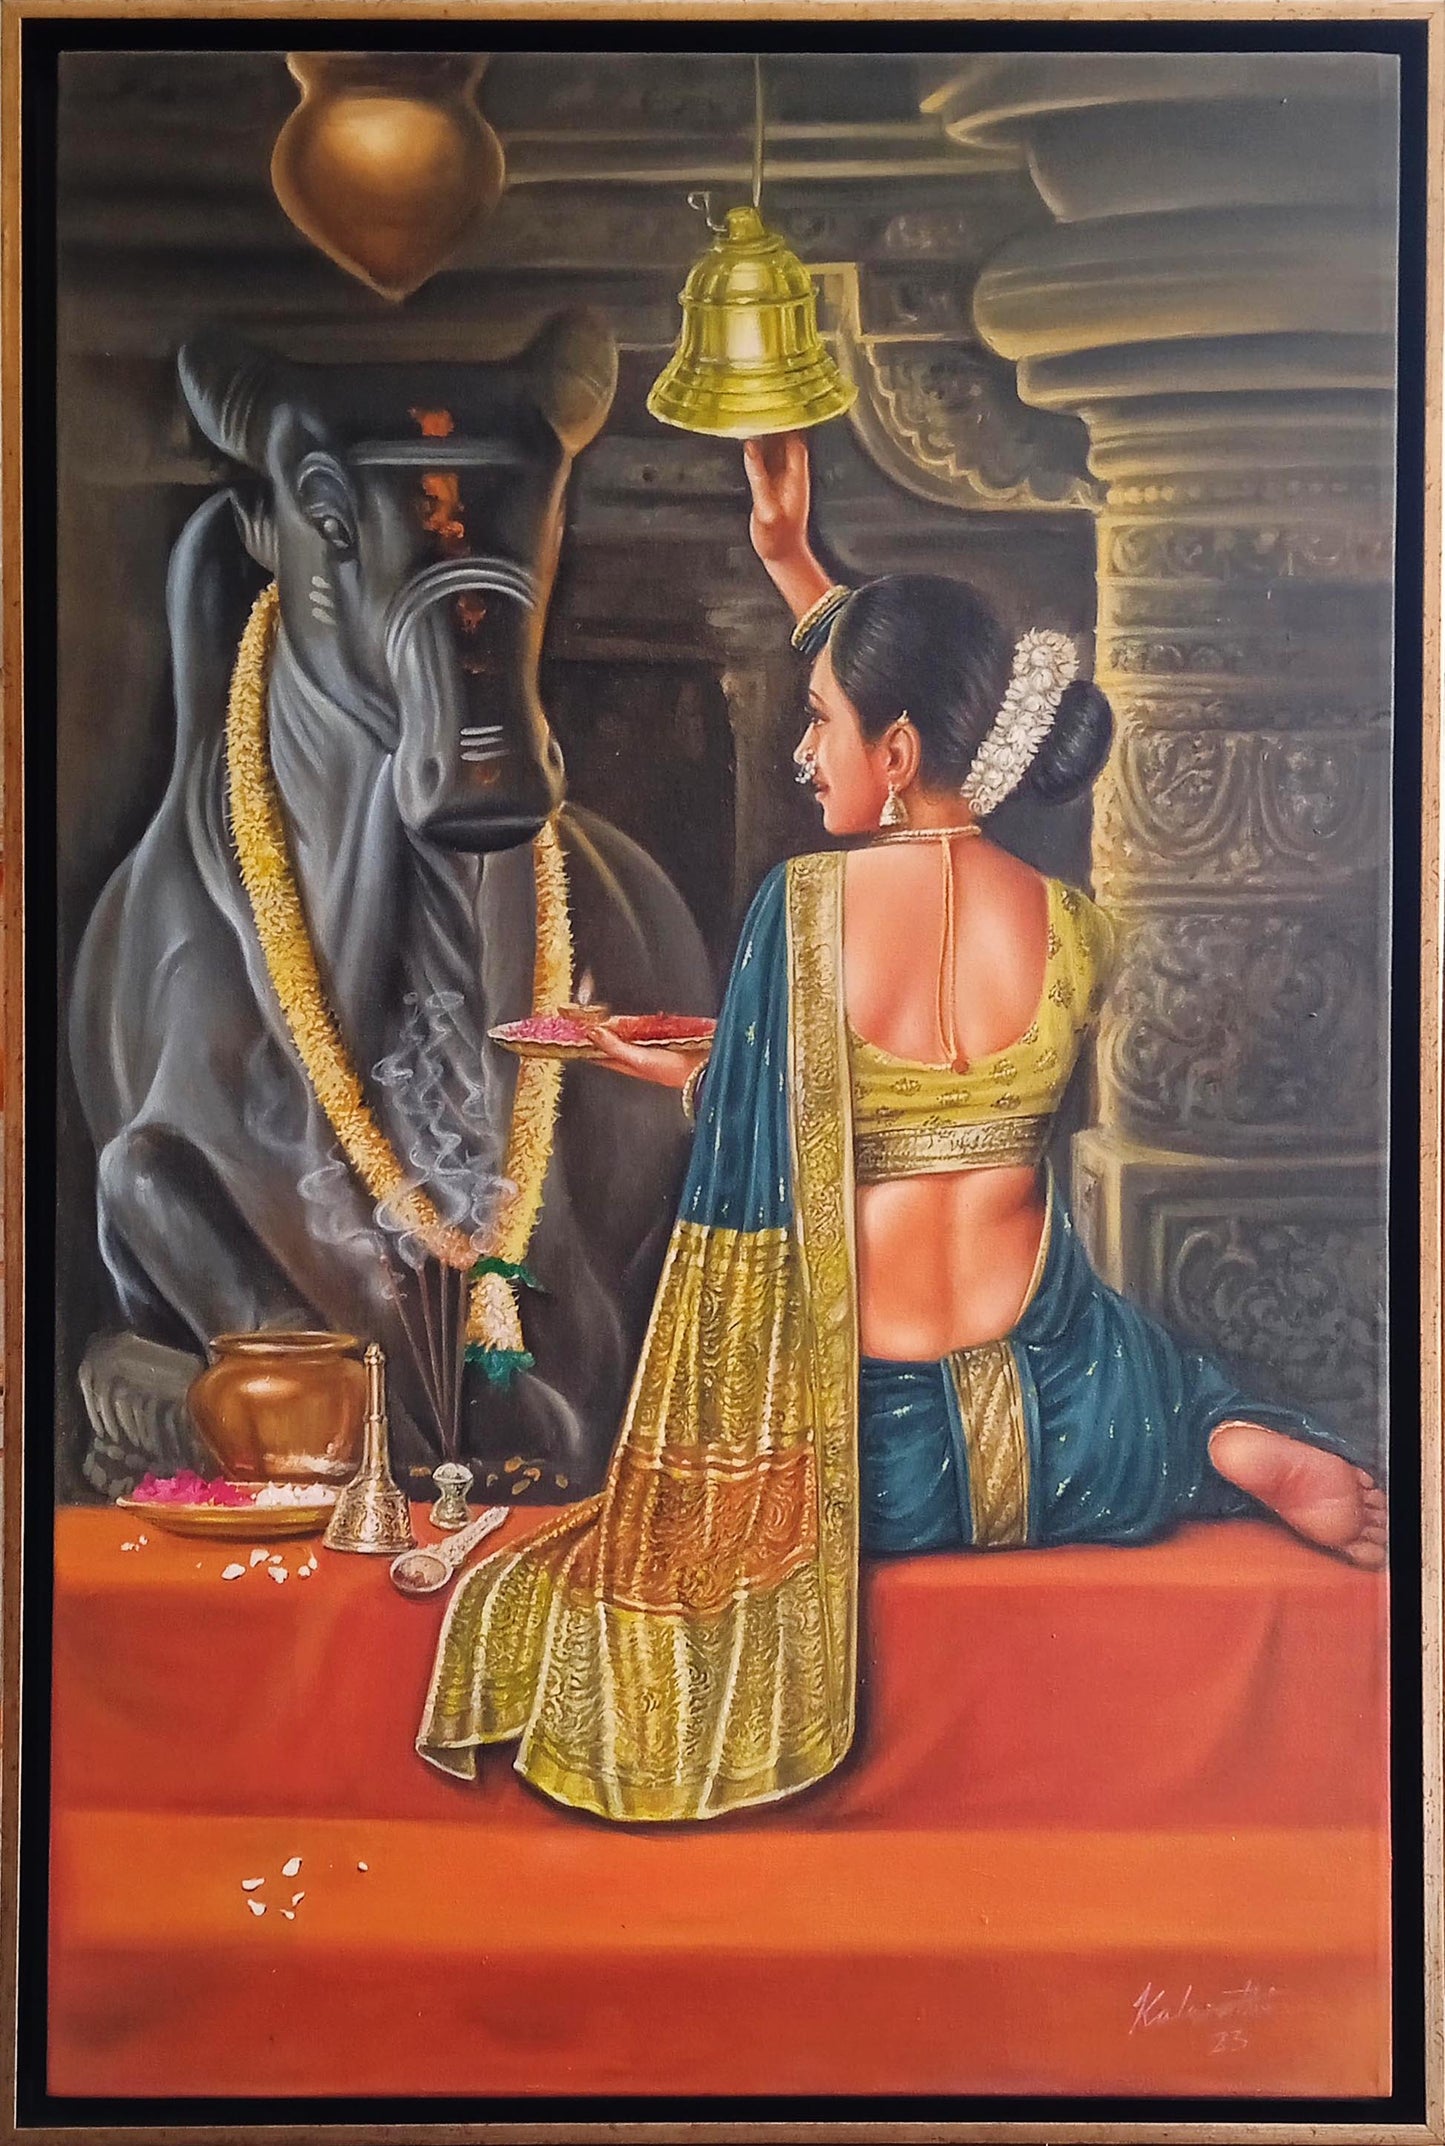 Obeisance by Kalarathi by Satgurus